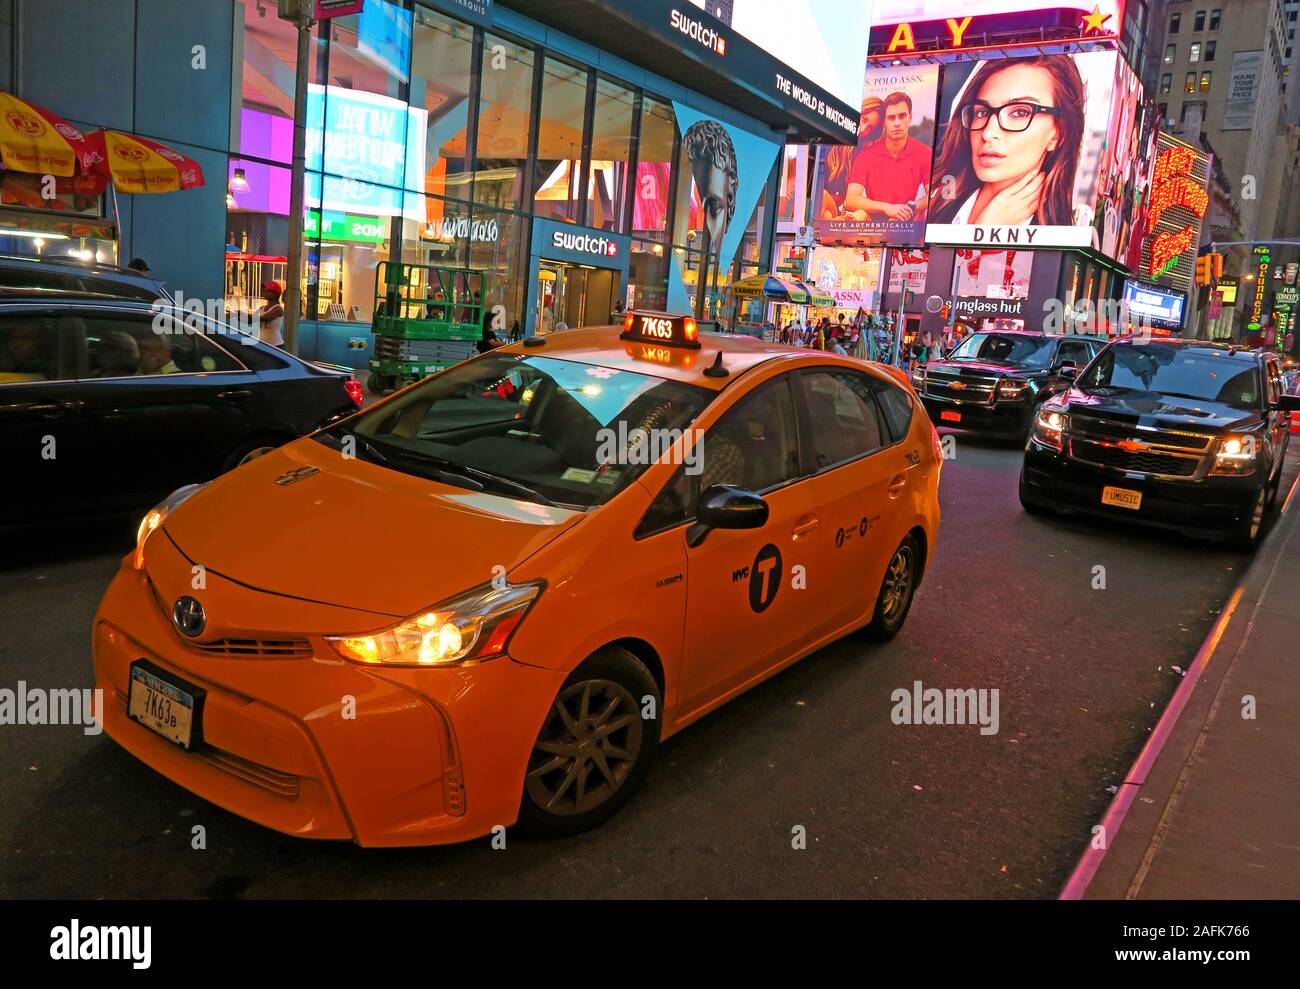 Yellow Cab 7K63 bei Nacht, Times Square, Manhattan, New York City, NY, USA Stockfoto